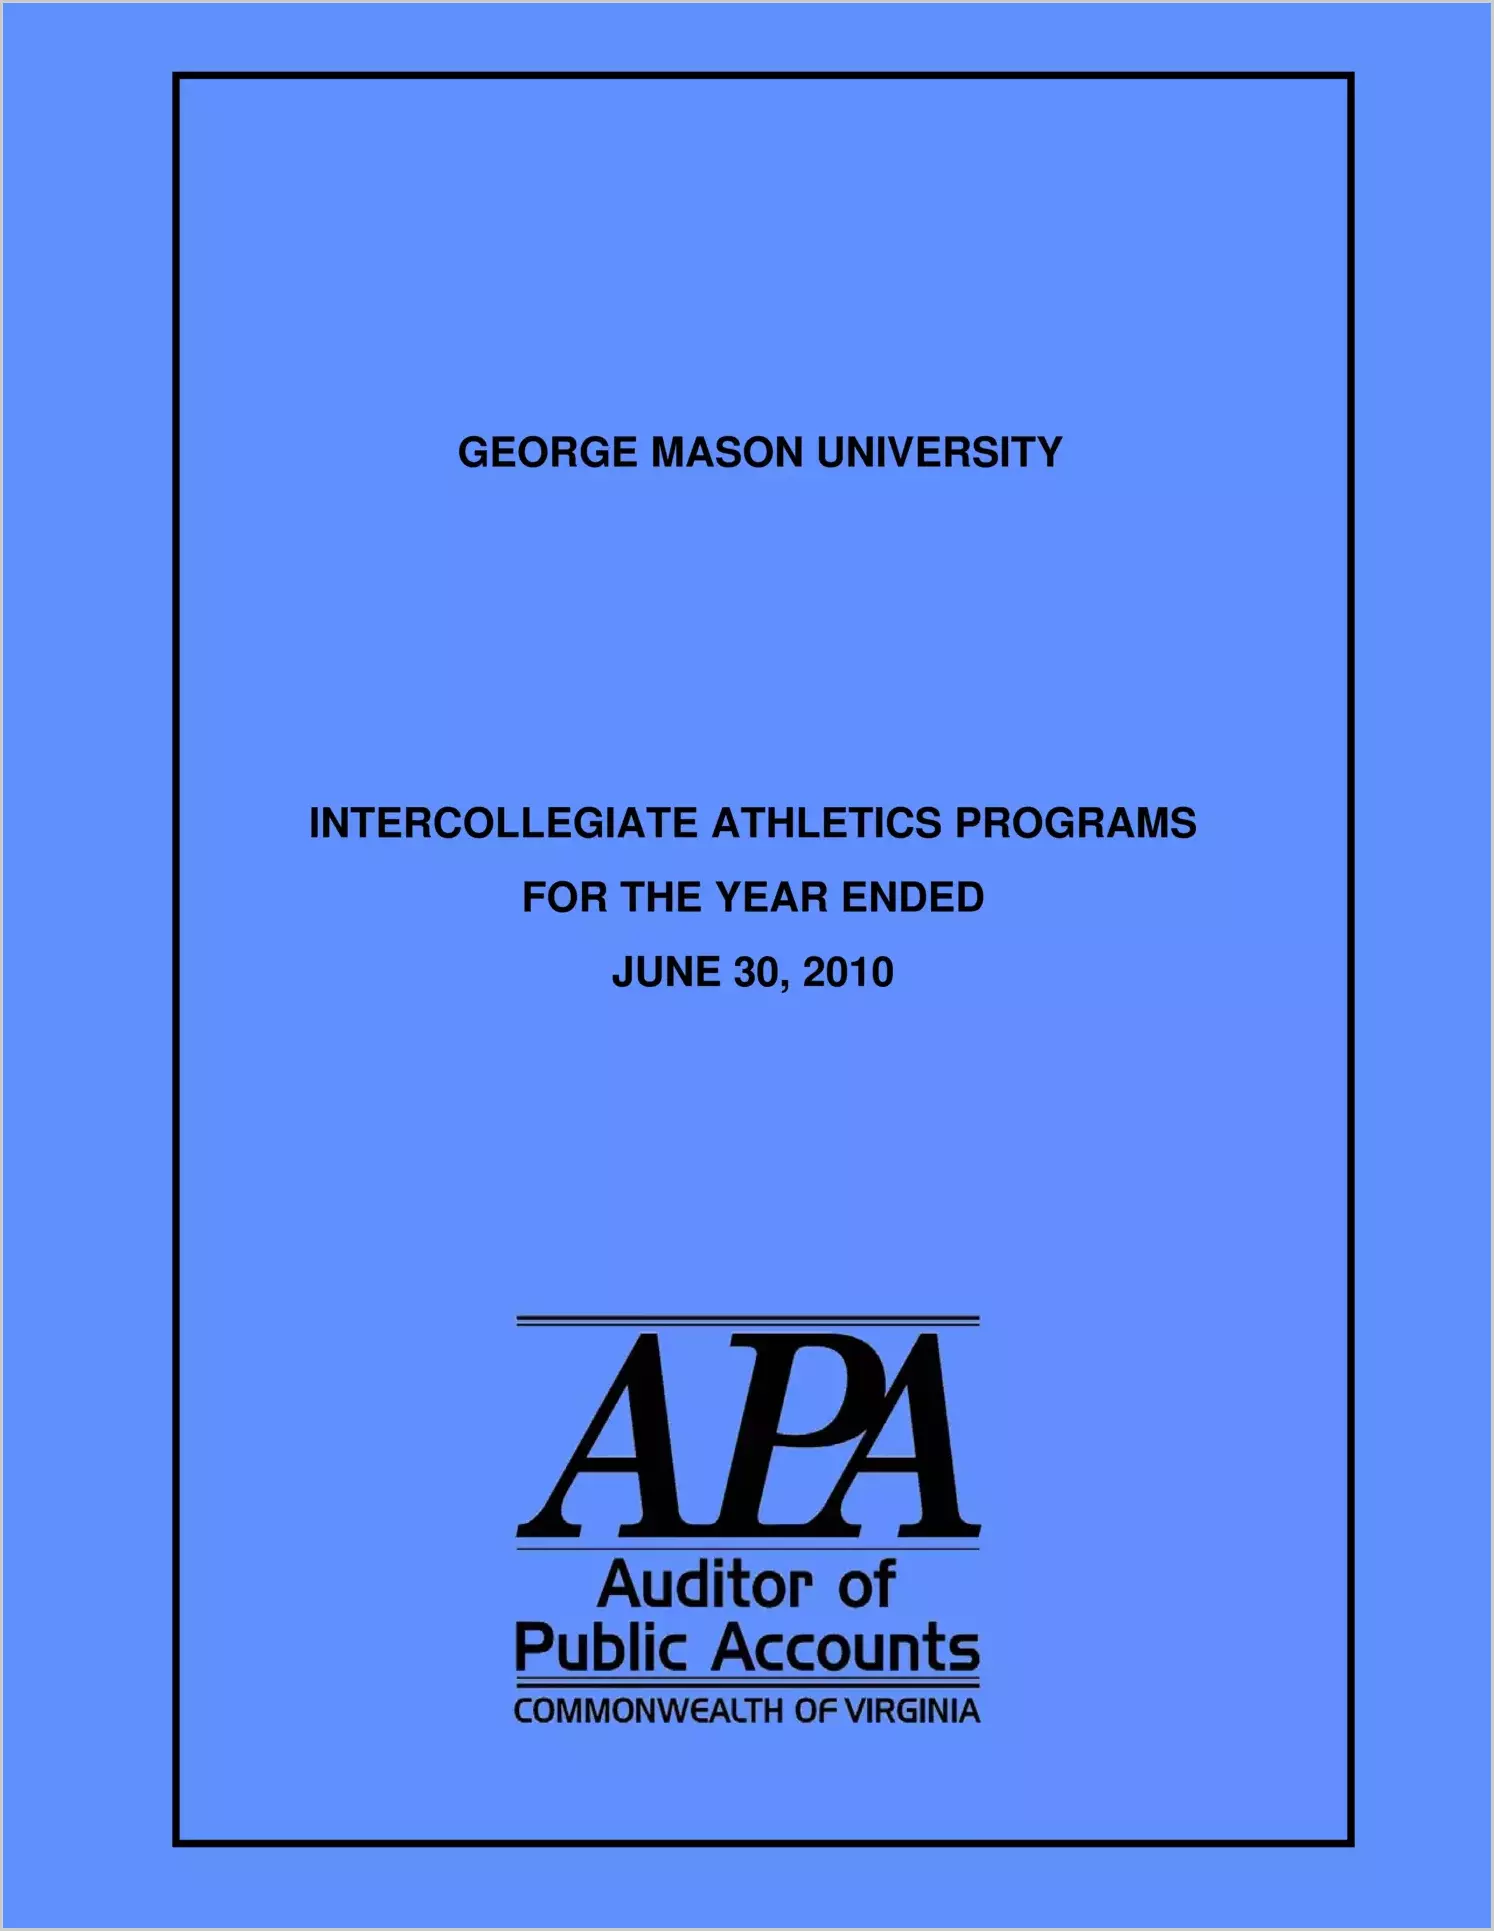 George Mason University Intercollegiate Athletics Programs for the year ended June 30, 2010